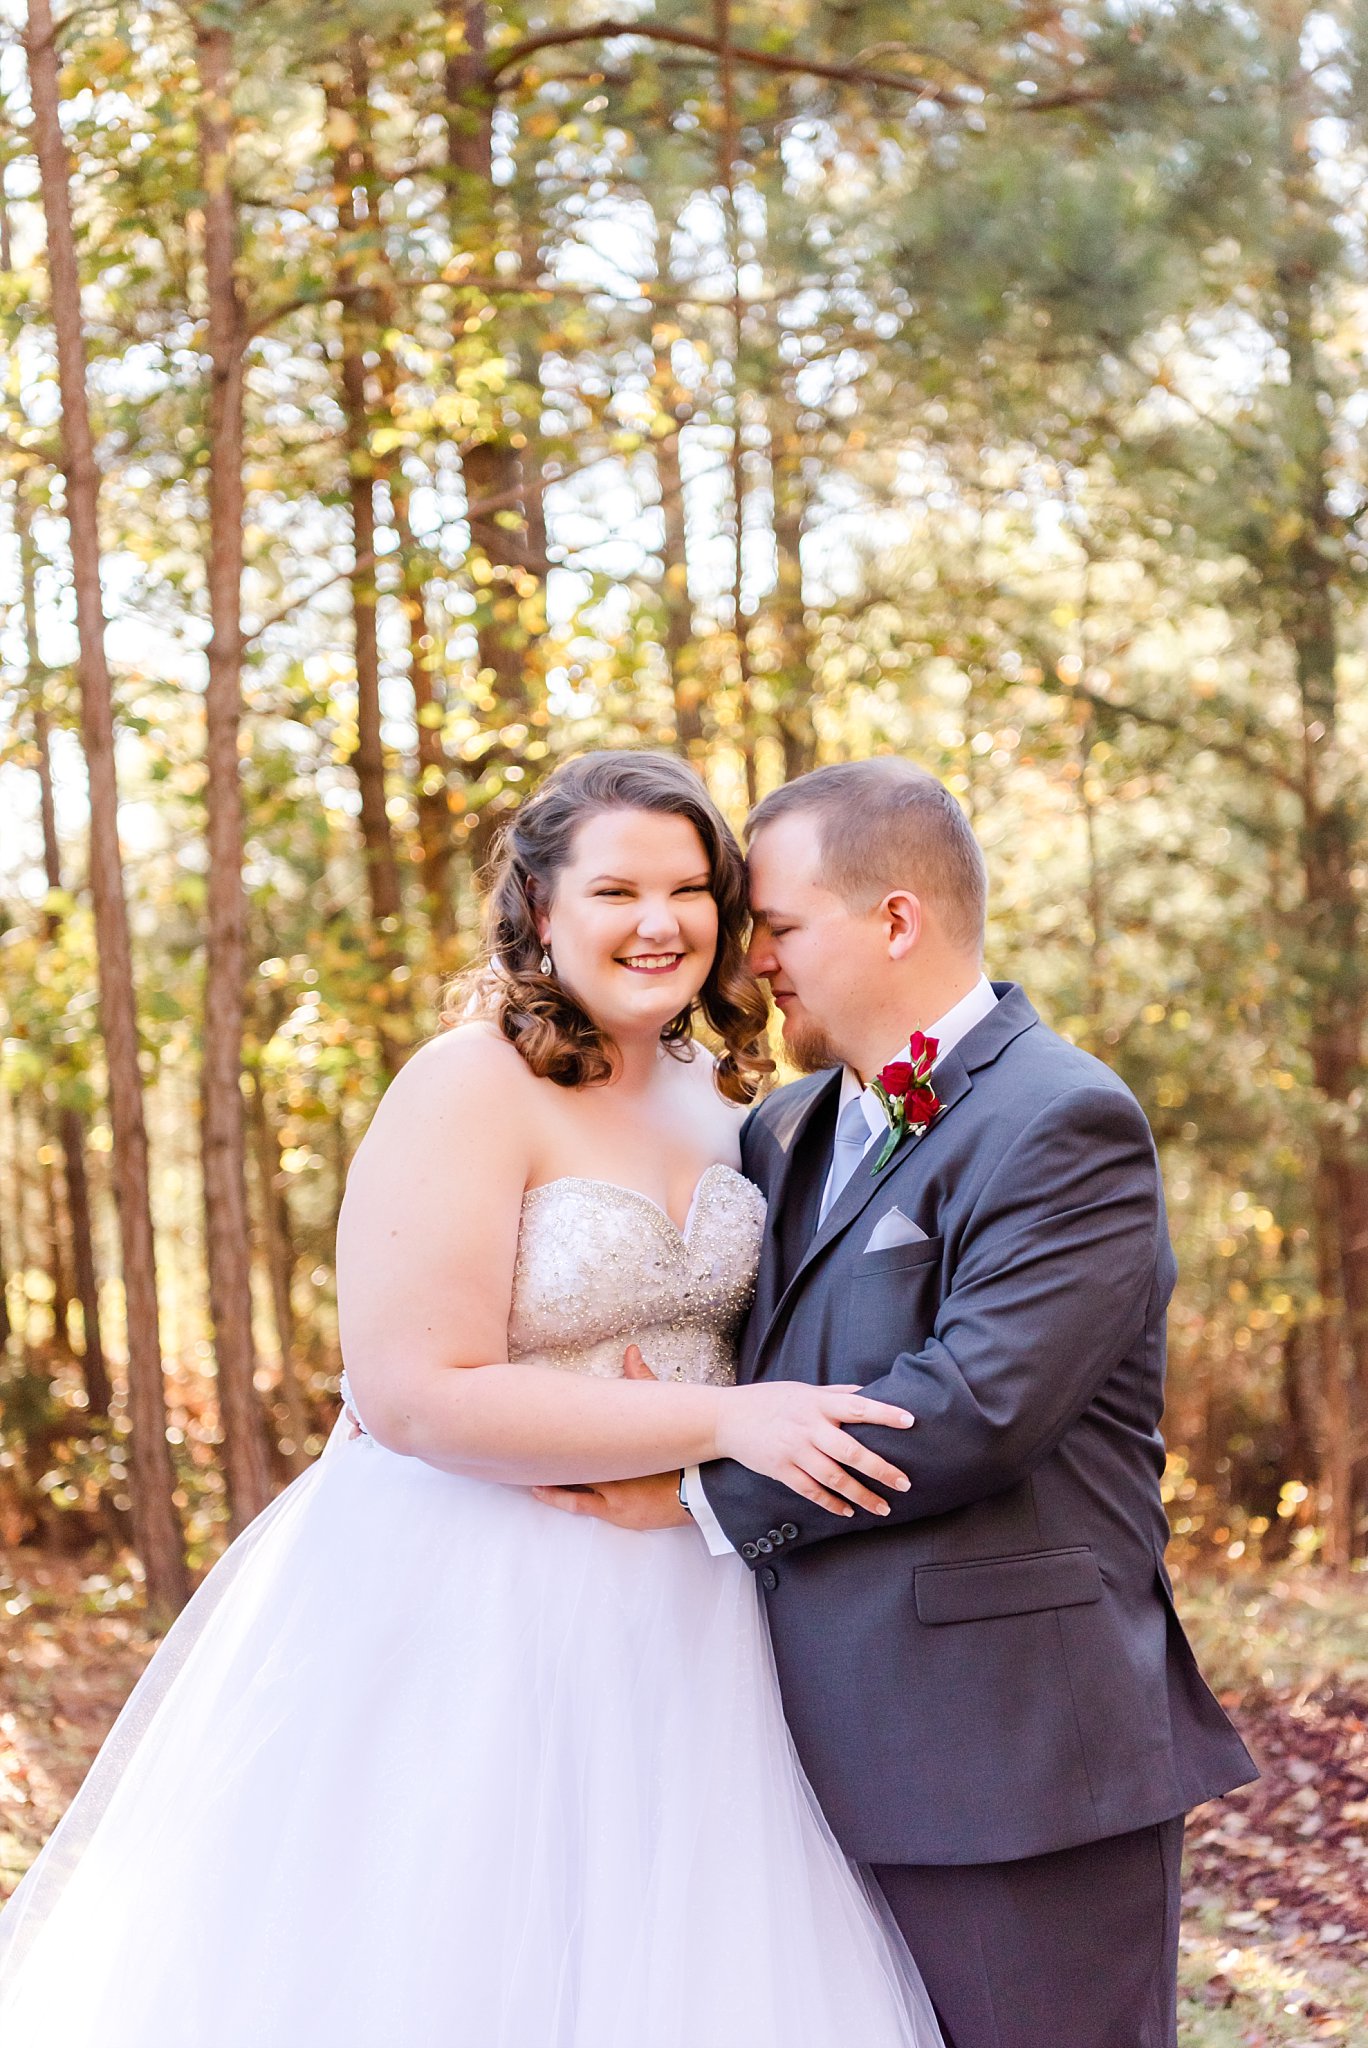 Wedding, Coach house, NC, Mount pleasant, november, wedding, photographer, details, bride